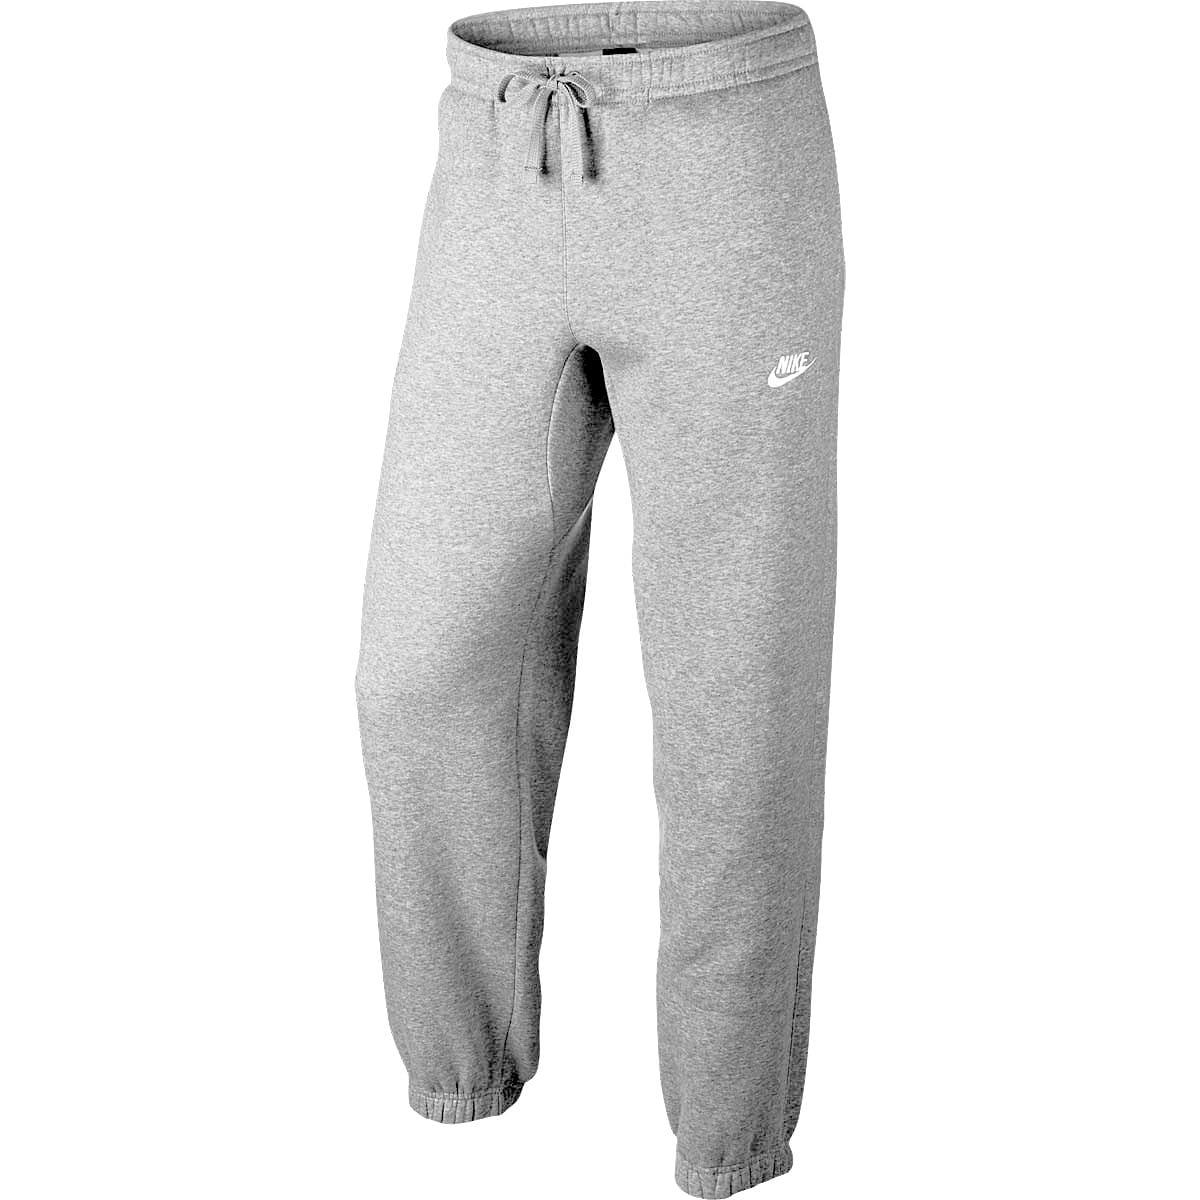 bottom pants grey/white 804406-063 